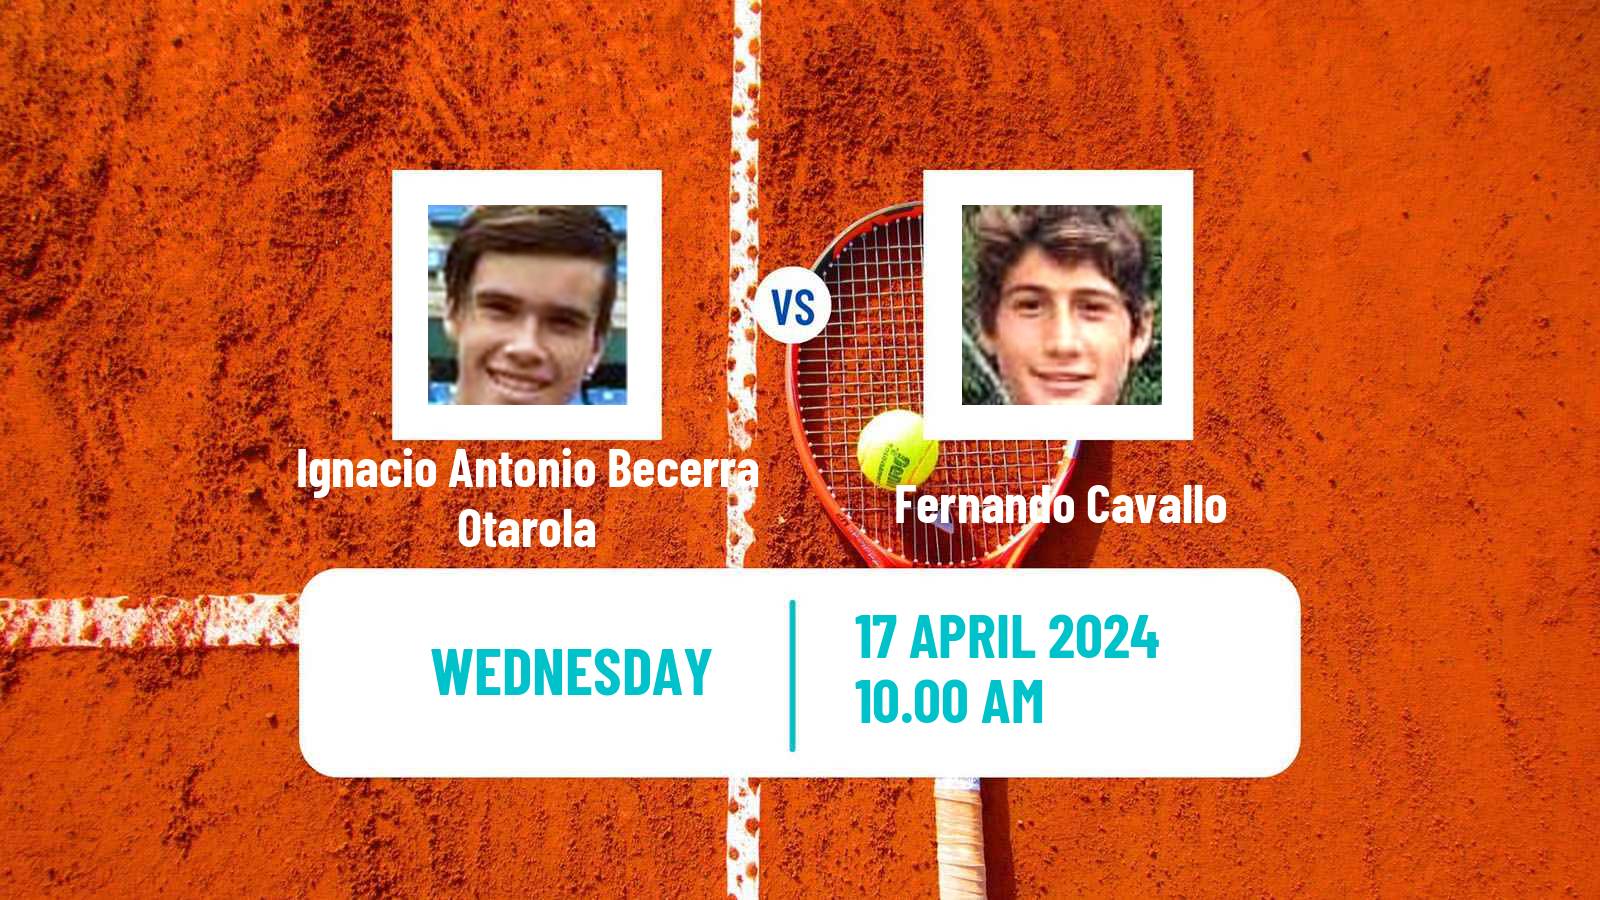 Tennis ITF M15 Santiago Men Ignacio Antonio Becerra Otarola - Fernando Cavallo